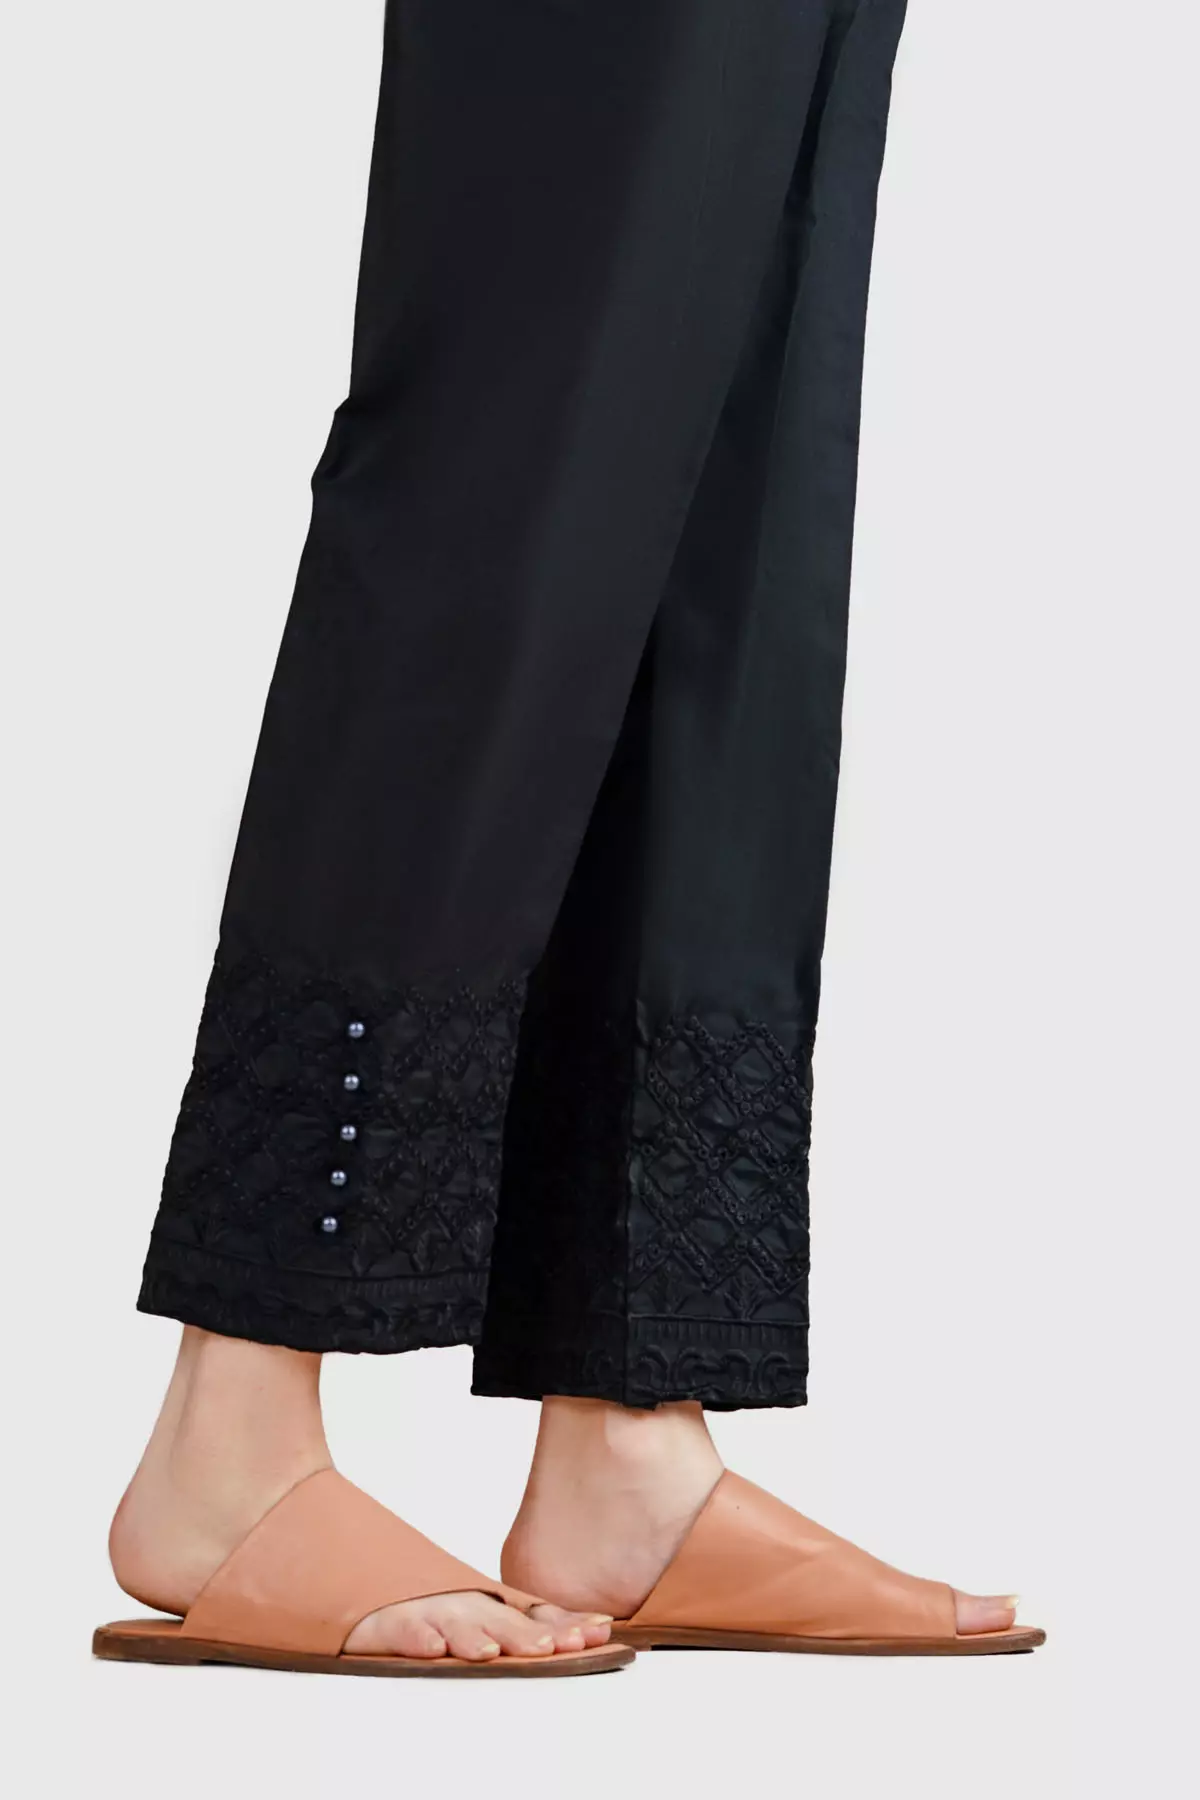 Fashion Chatni - Most stylish latest Trousers design for... | Facebook